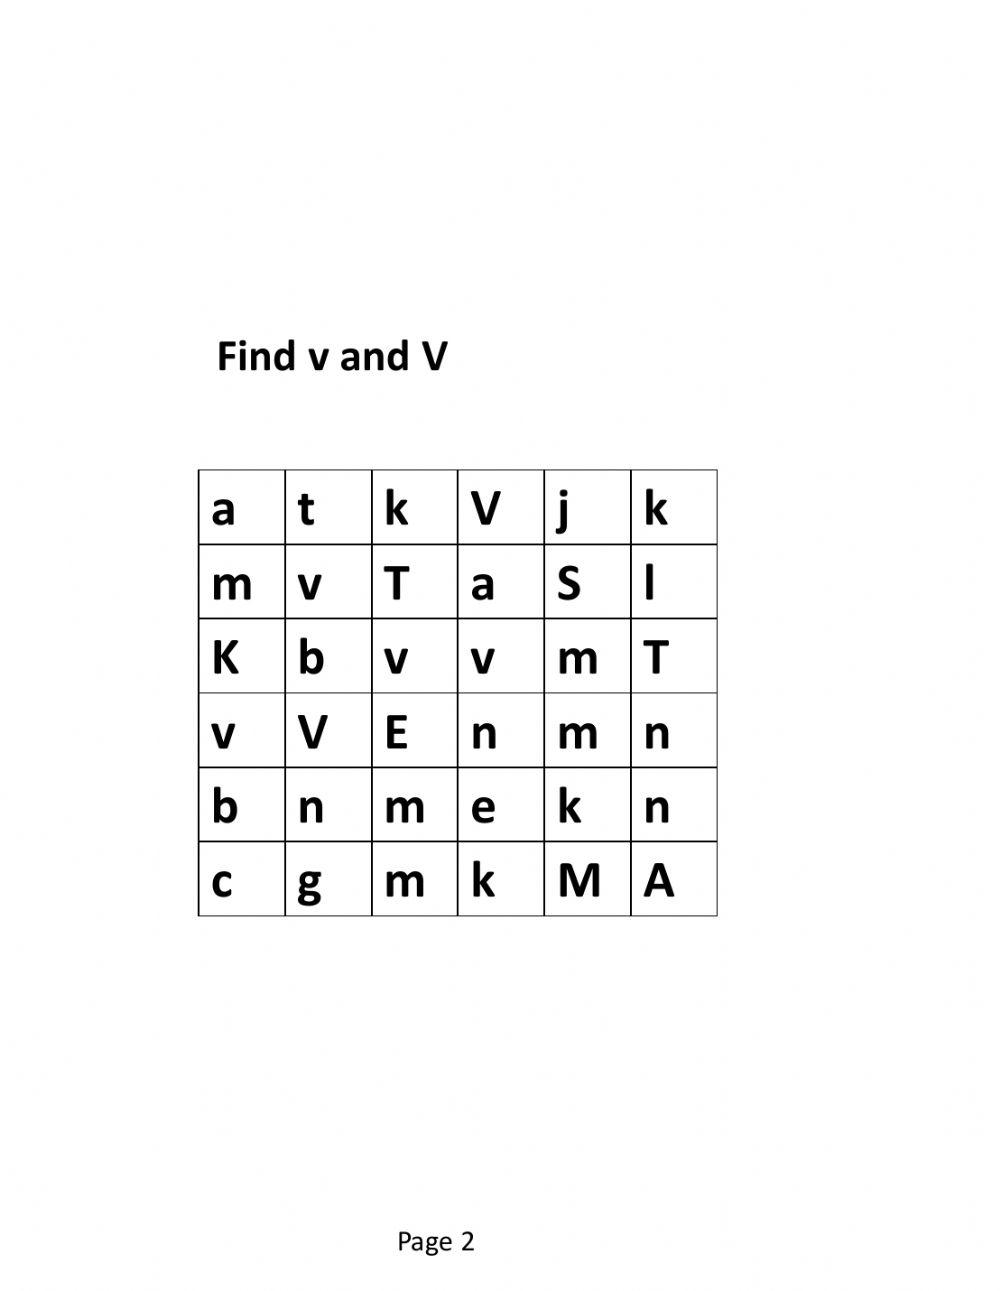 find (j and J)(v and V)